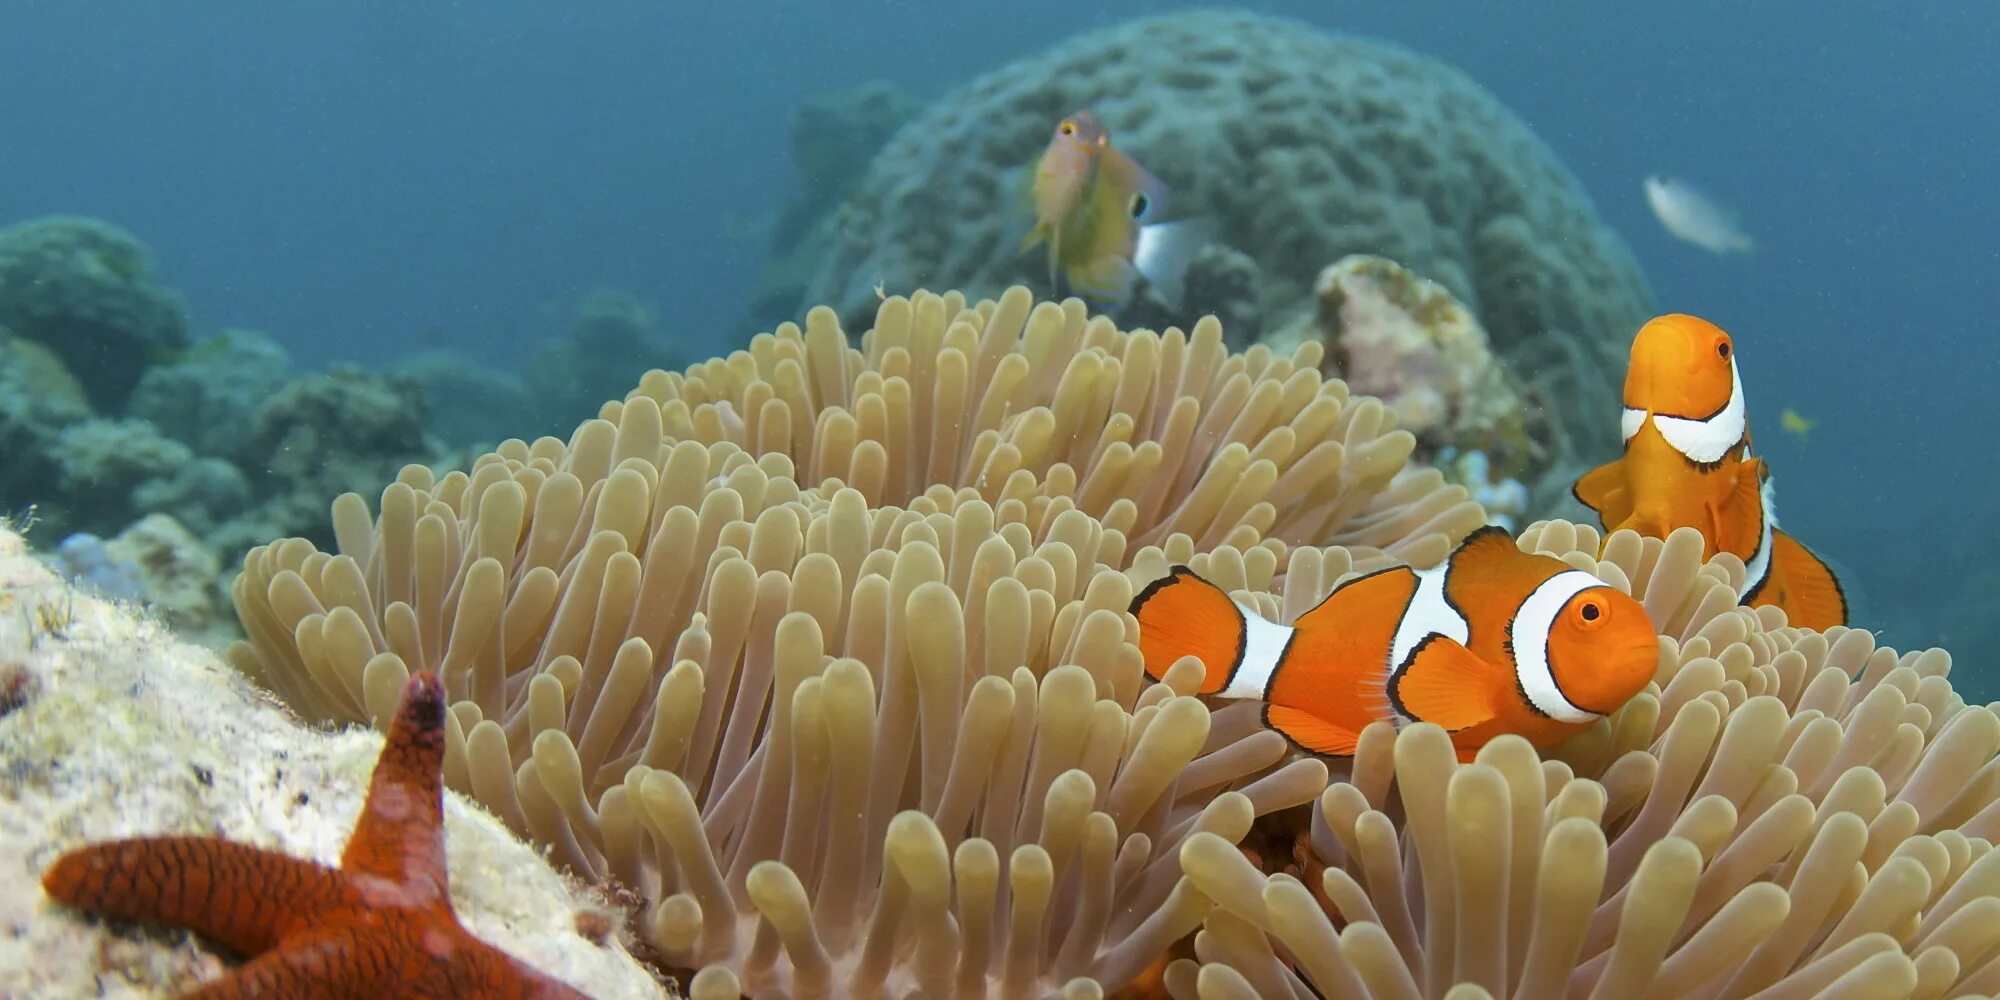 Great coral reef. Большой Барьерный риф Австралия. Большой Барьерный риф кораллы. Кораллы большого барьерного рифа Австралия. Большой Барьерный риф Австралия подводный мир.